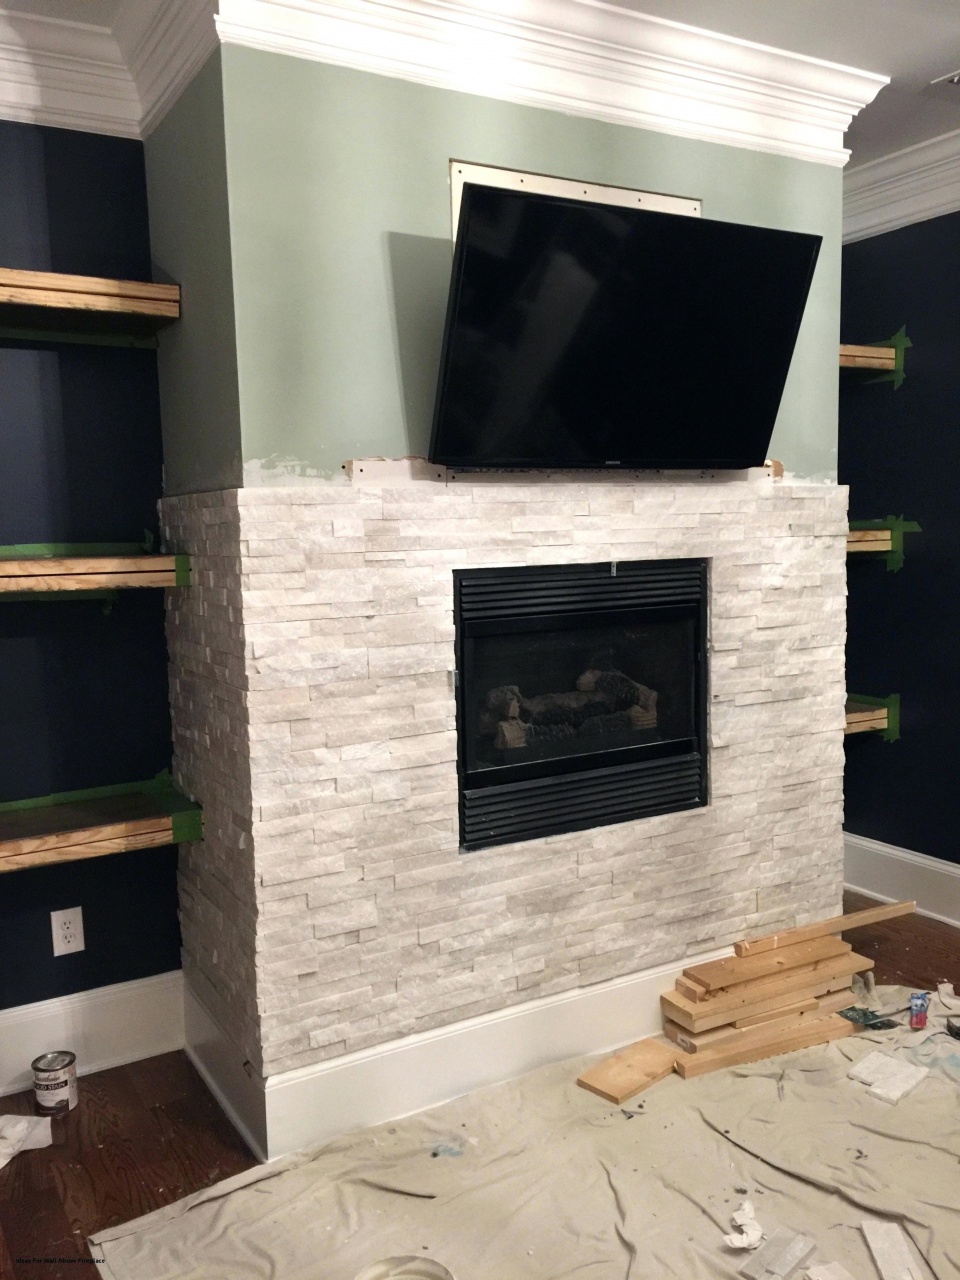 Tv Fireplace Wall Unit Designs Luxury High Heat Paint for Fireplace – Fireplace Ideas From "high